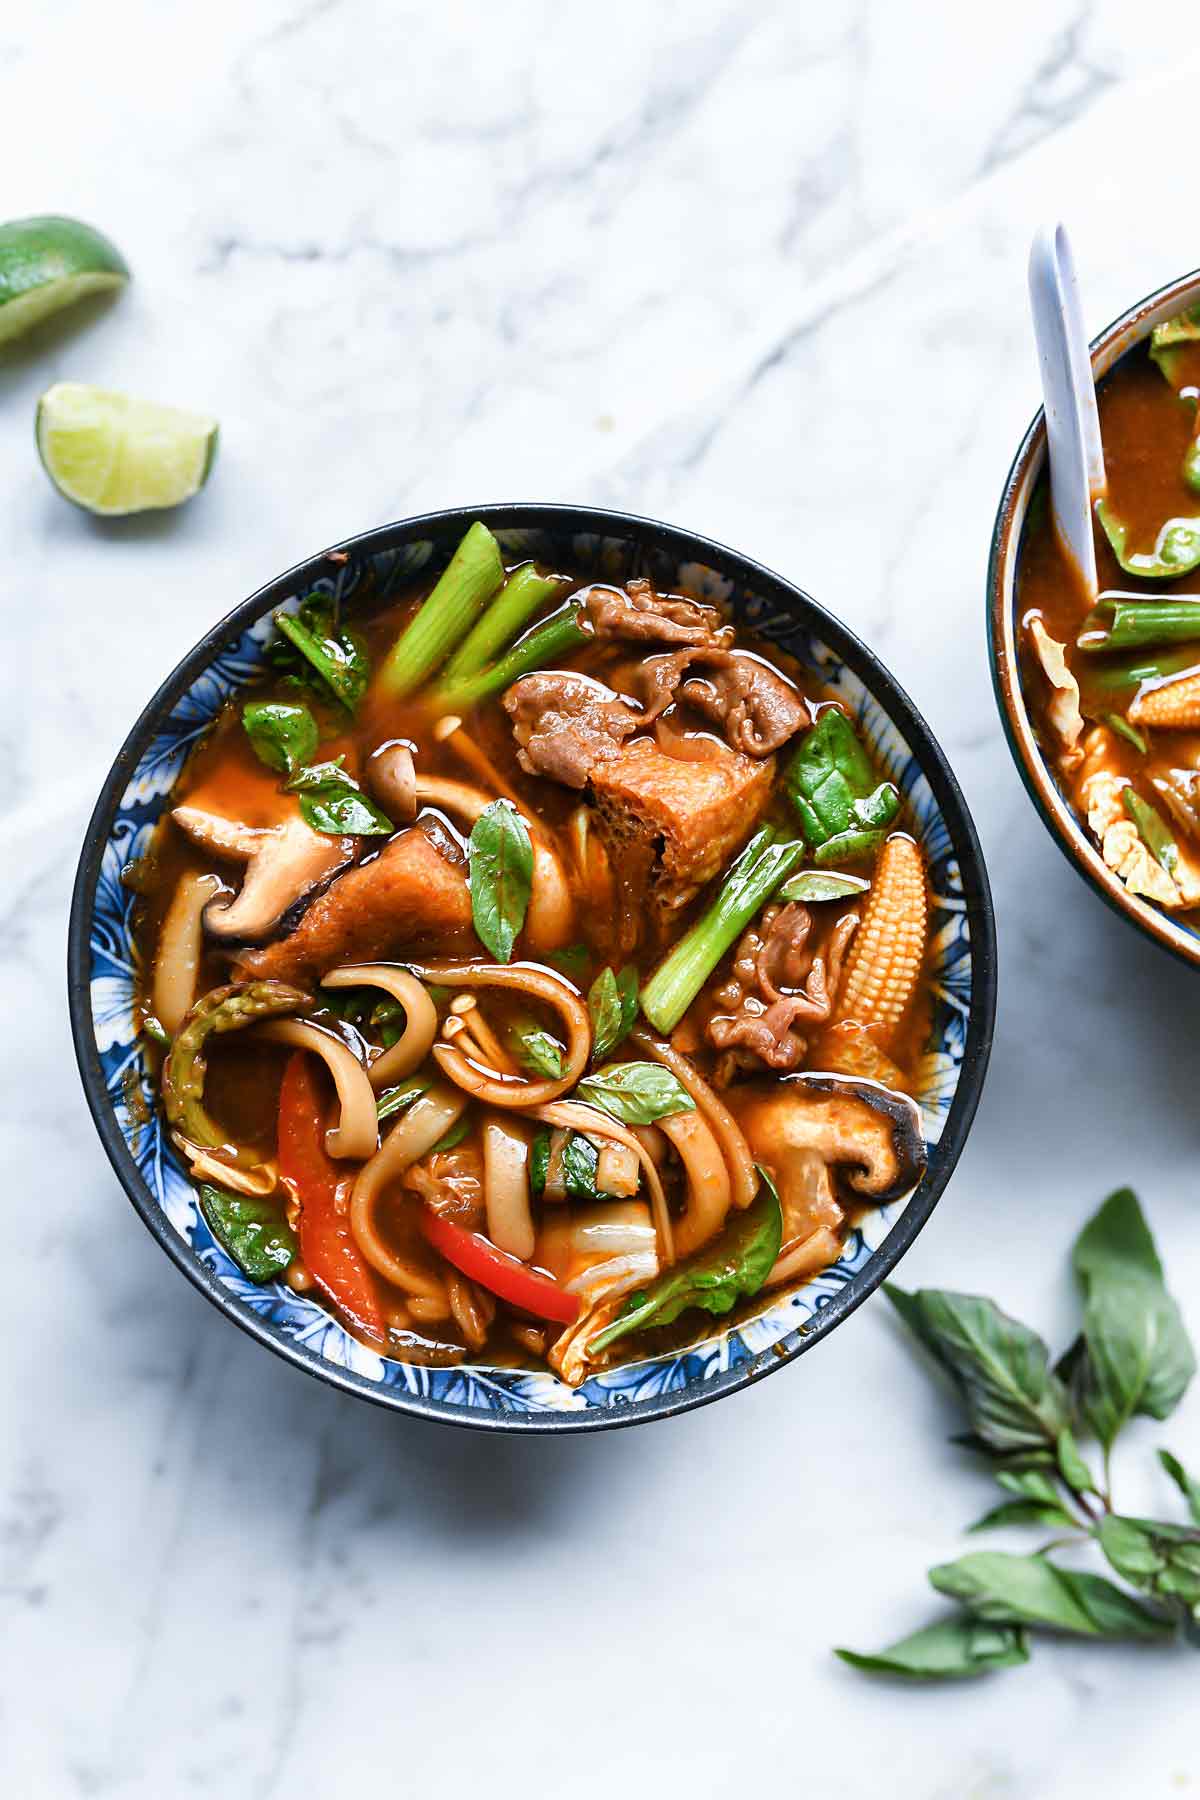 https://www.foodiecrush.com/wp-content/uploads/2018/02/Asian-Red-Curry-Hot-Pot-foodiecrush.com-065.jpg